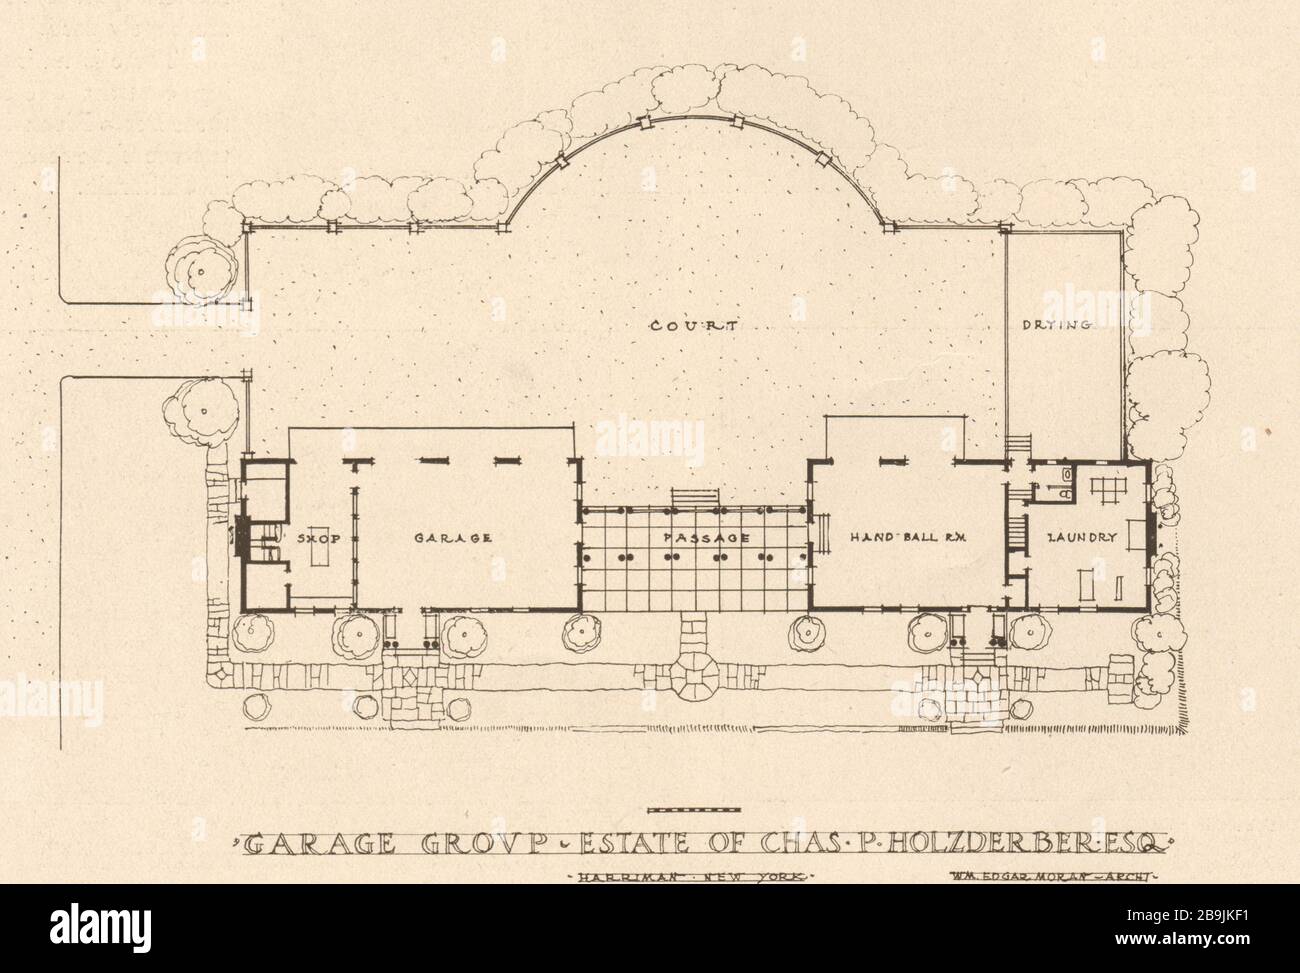 Garage group estate of Chas P. Holzderber Esq, Harriman, New York. Plan. W.M. Edgar Moran, Architect (1919) Stock Photo